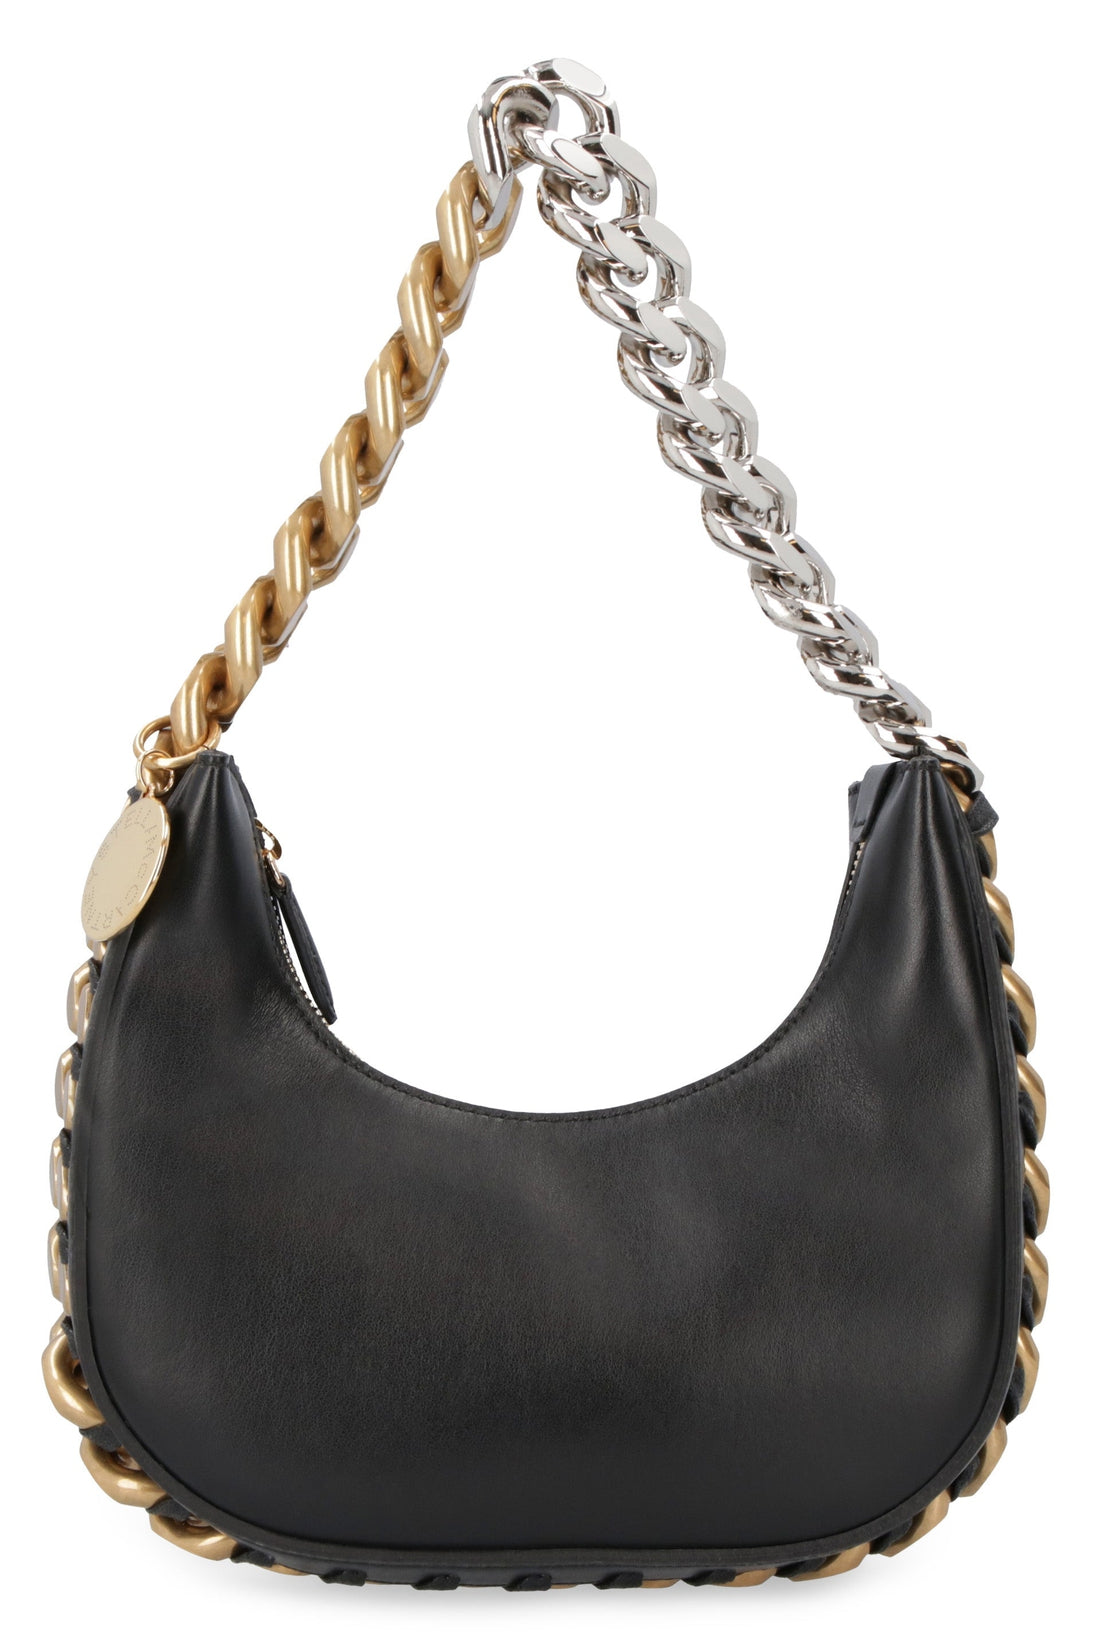 Stella McCartney-OUTLET-SALE-Zip Frayme leather mini handbag-ARCHIVIST